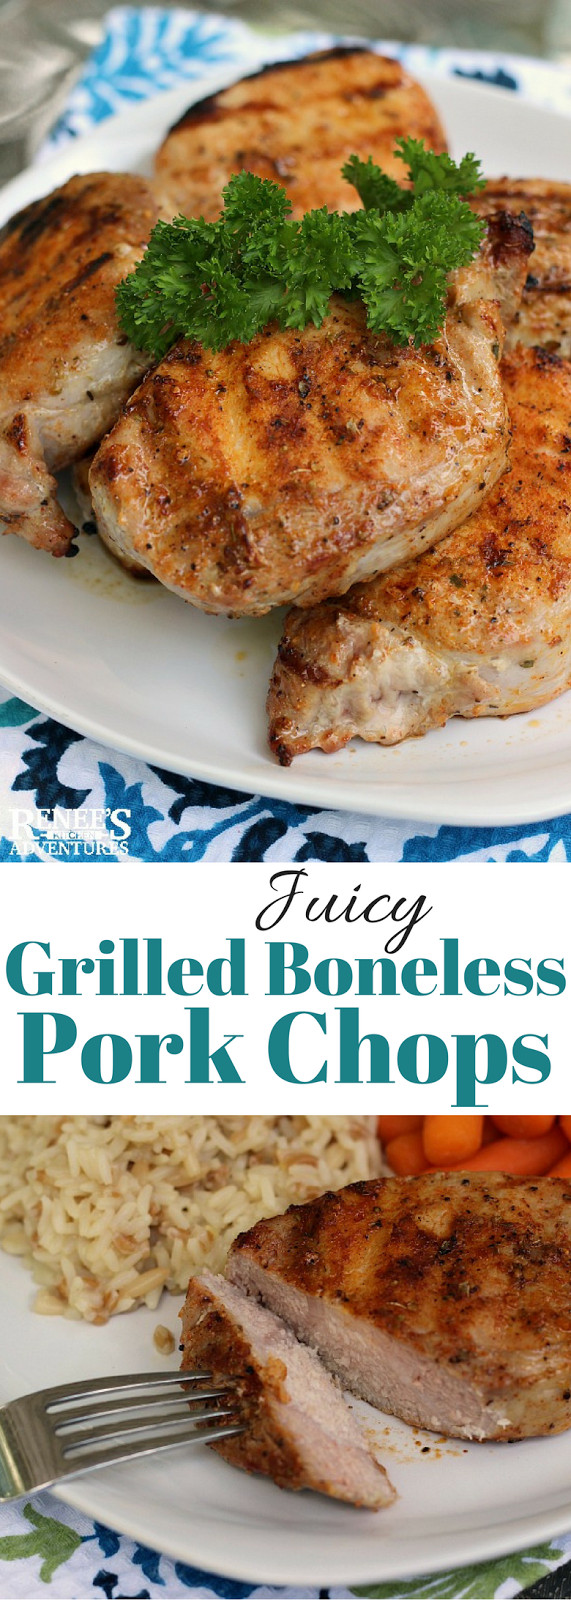 Boneless Pork Chops On The Grill
 Juicy Grilled Boneless Pork Chops